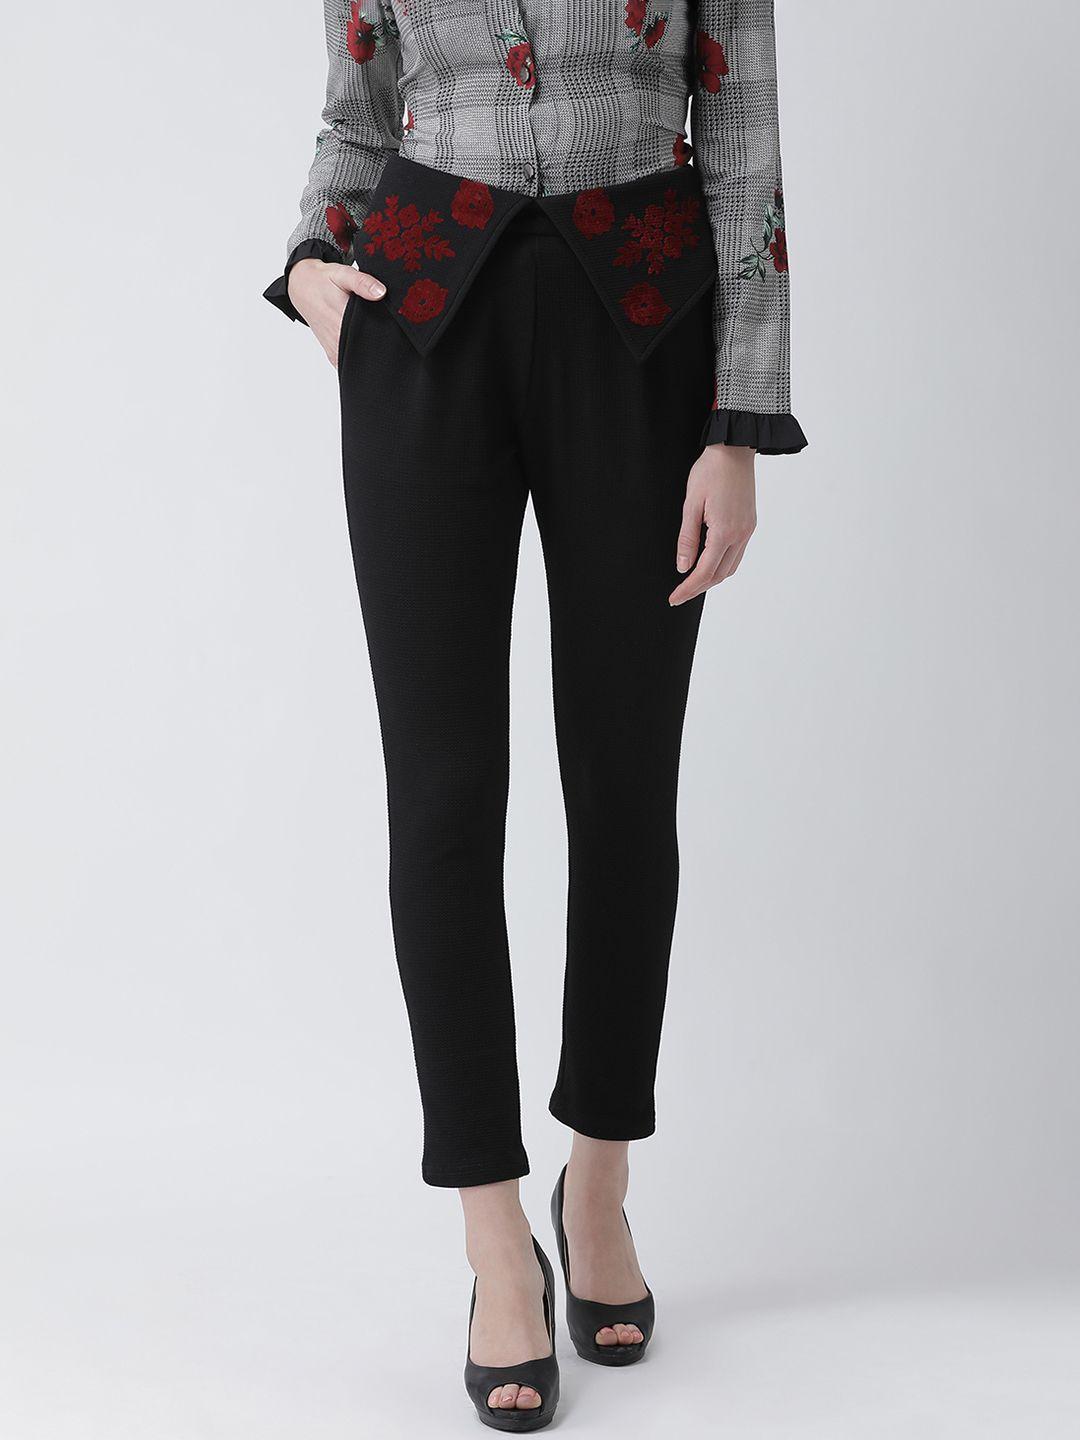 kassually women black & red regular fit printed regular trousers